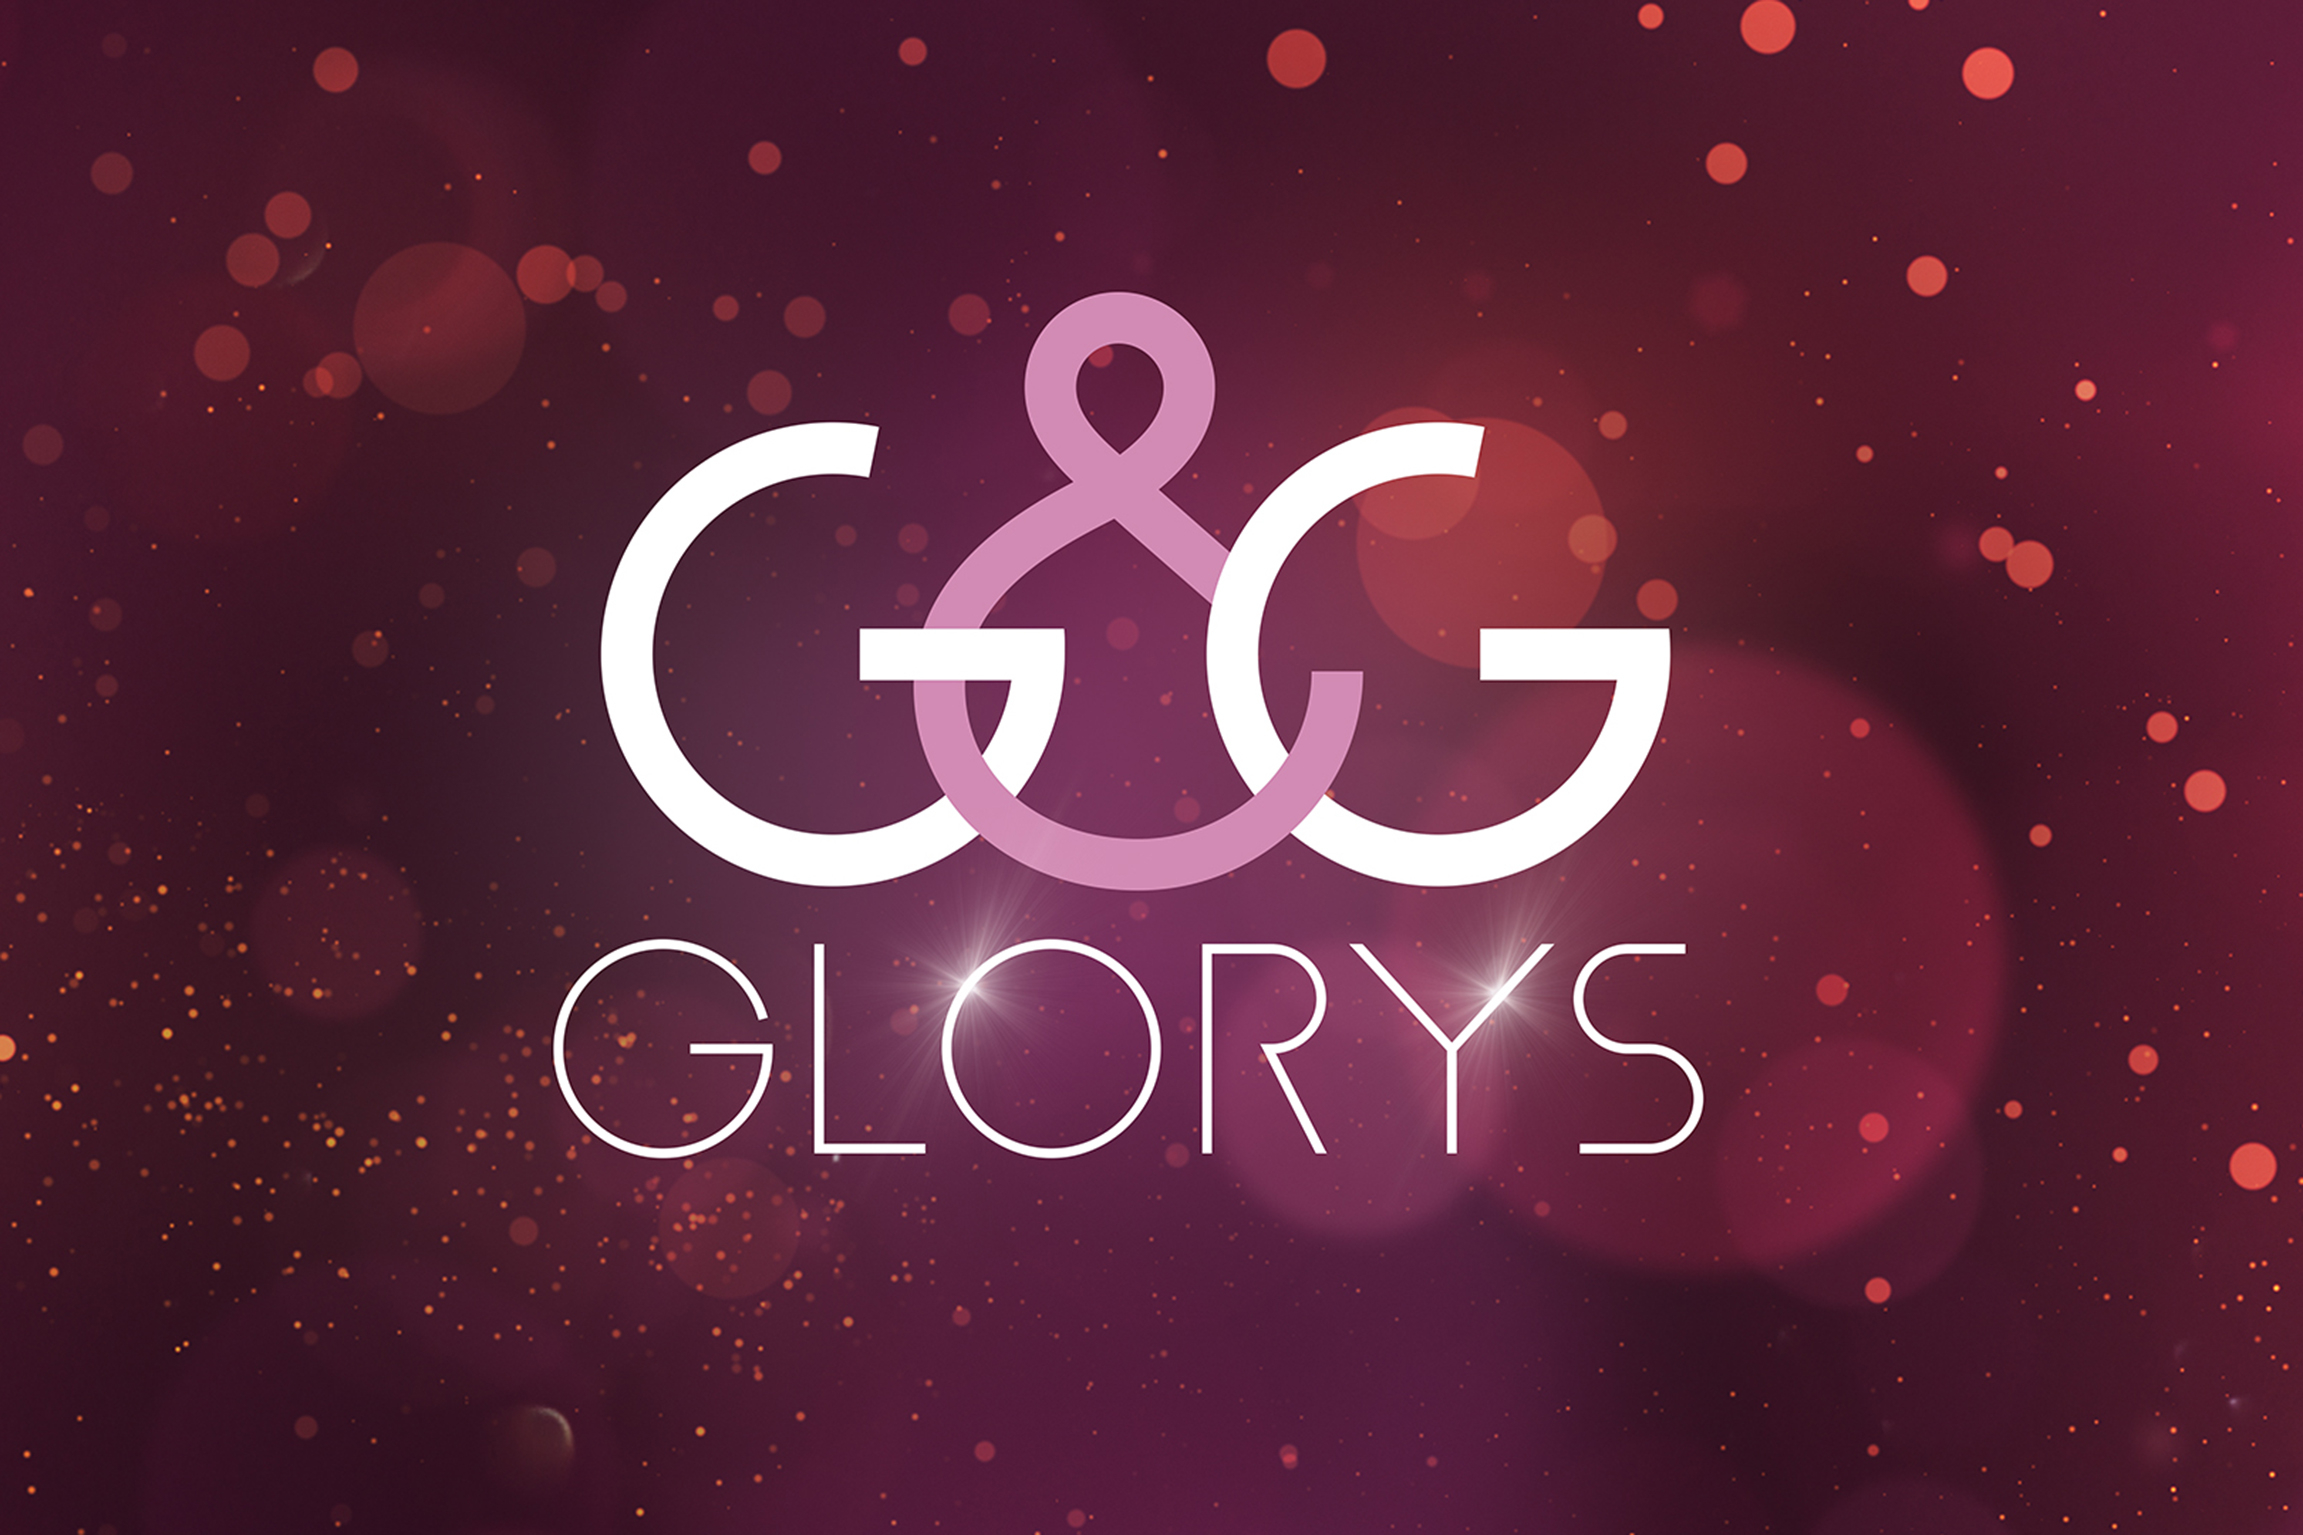 Glanz & Gloria - Glorys Keyvisual 2018 Copyright: SRF